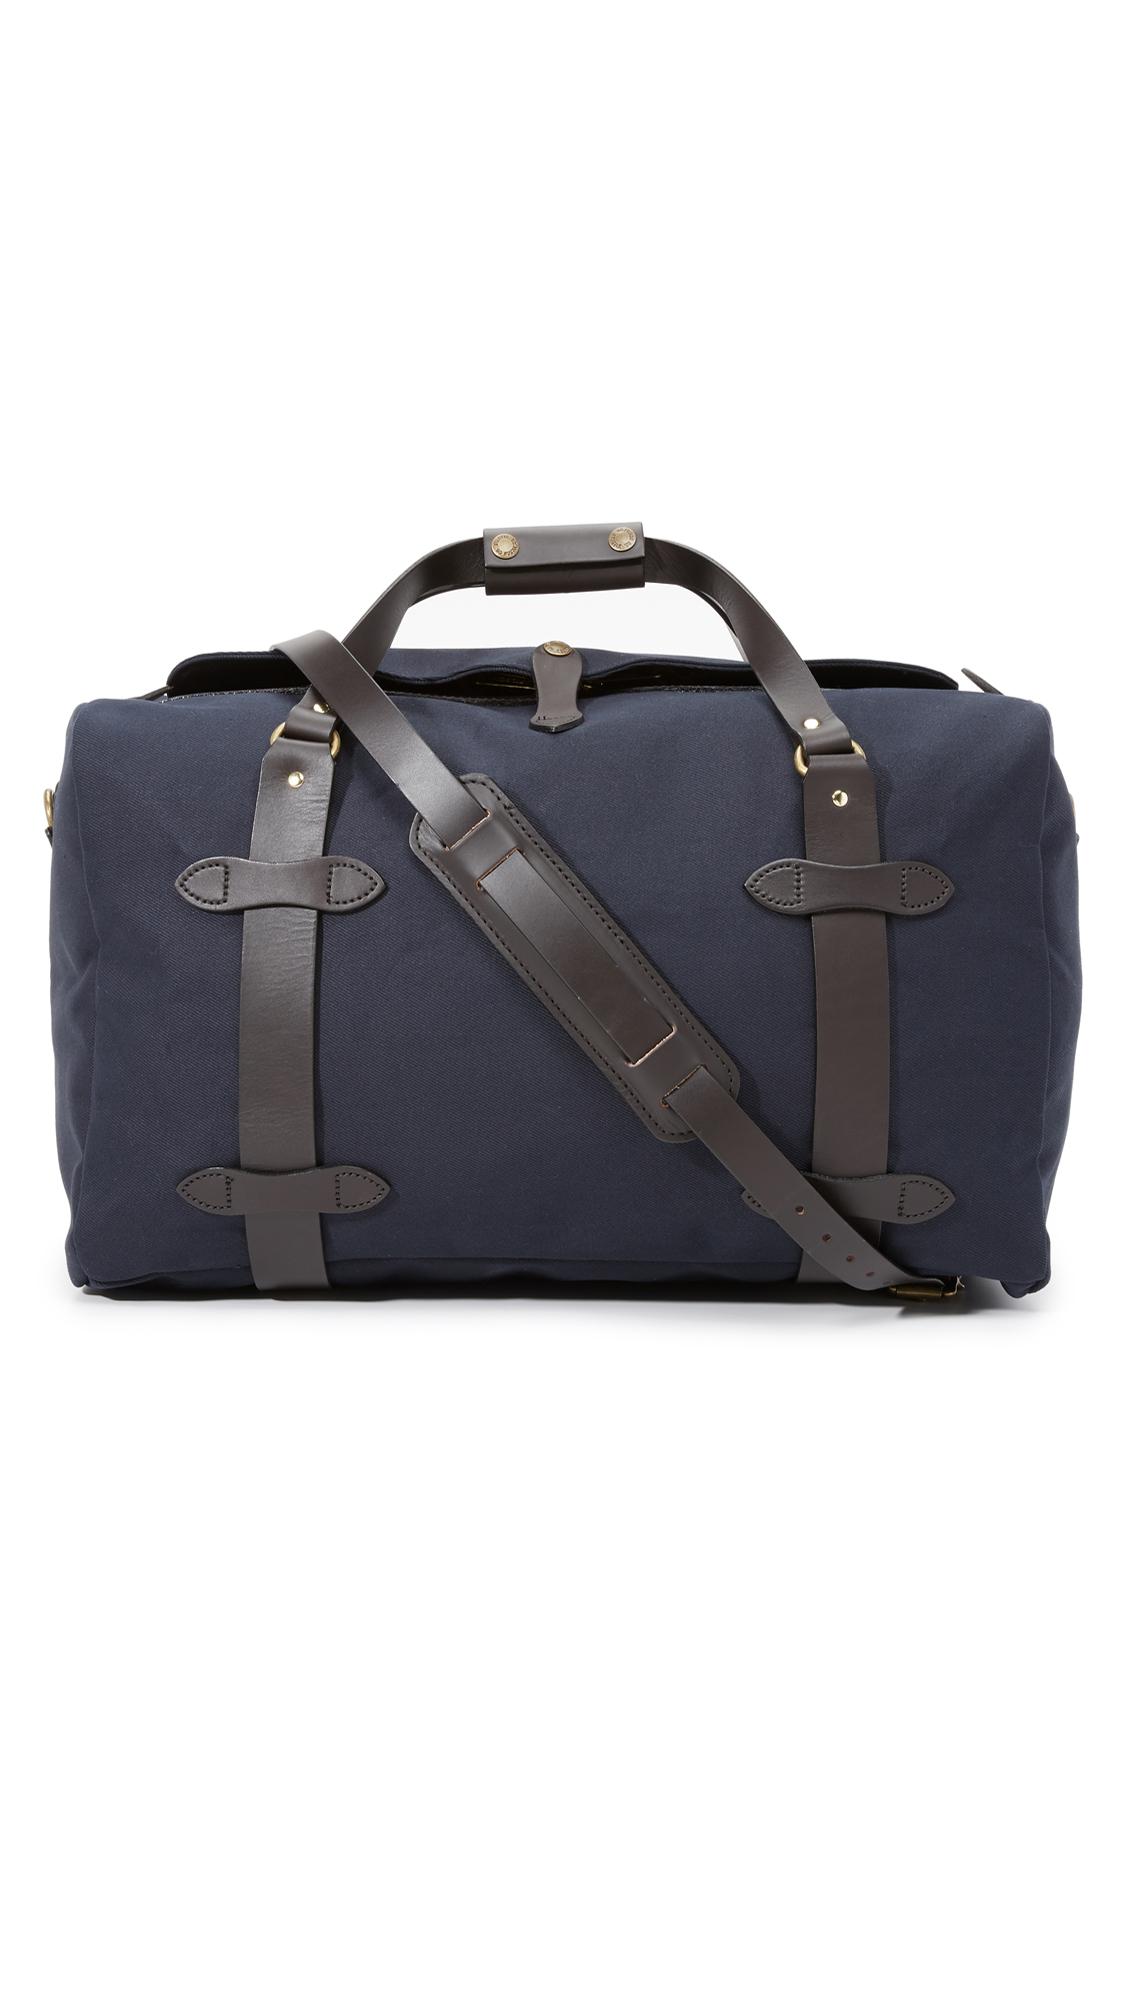 Lyst - Filson Medium Duffel Bag in Blue for Men